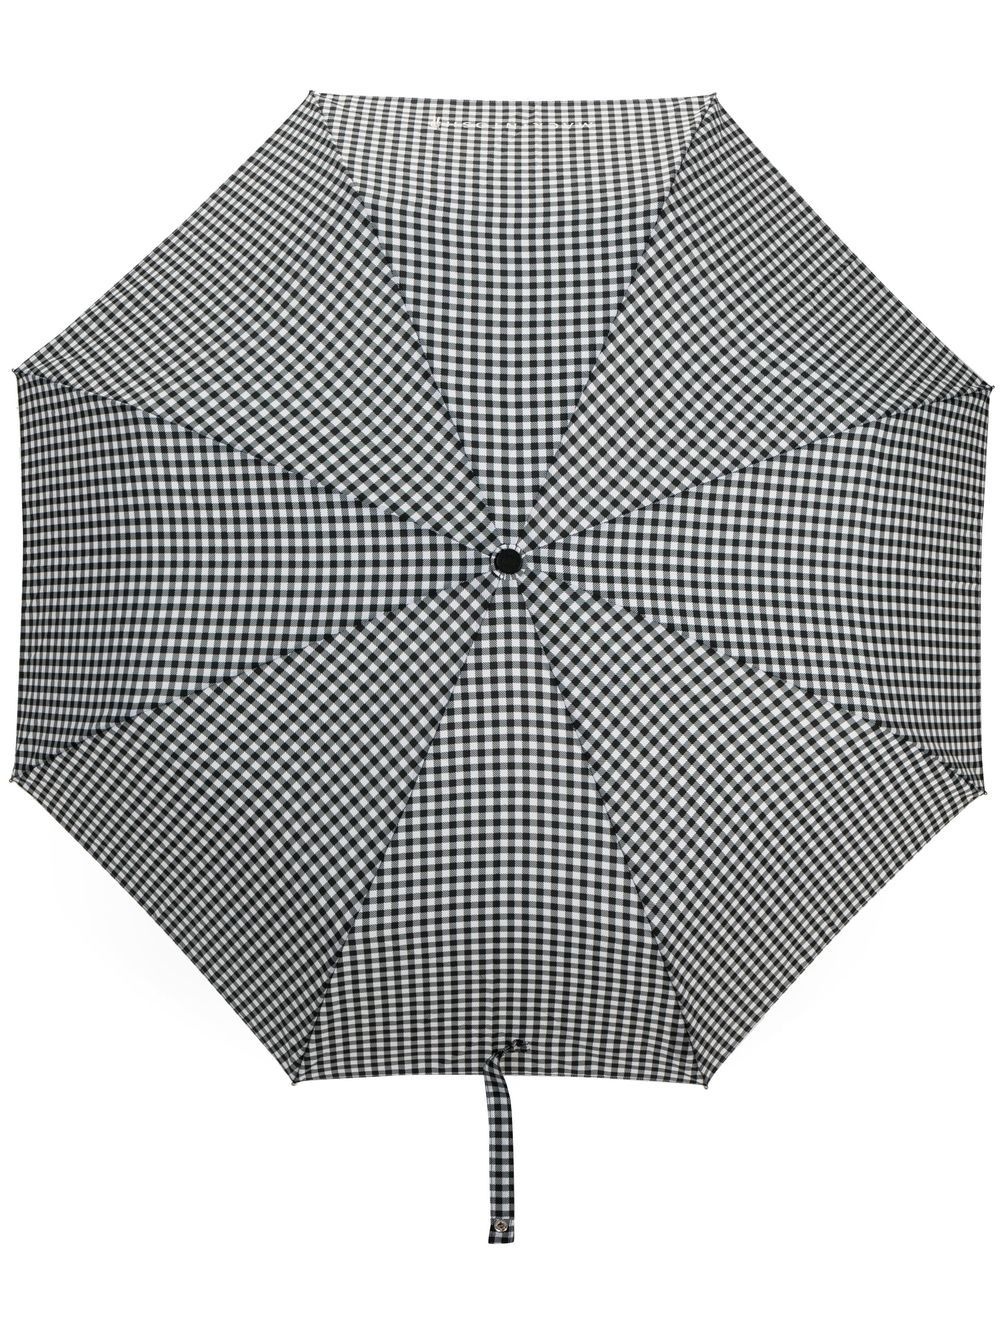 Ayr gingham-check umbrella - 1